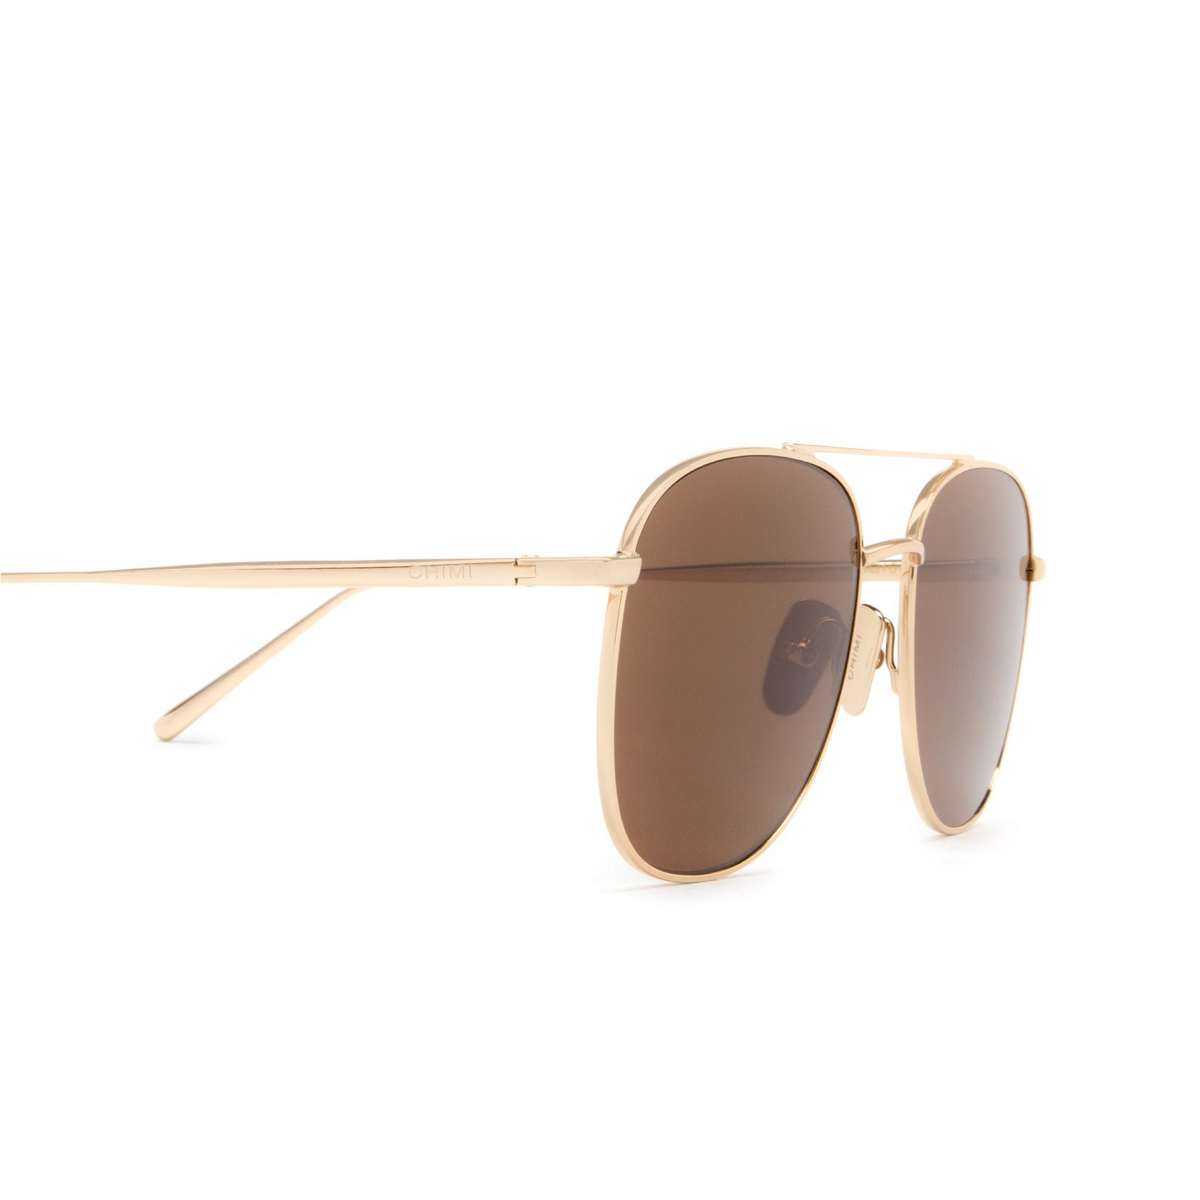 Chimi PILOT Sunglasses BROWN - 3/4